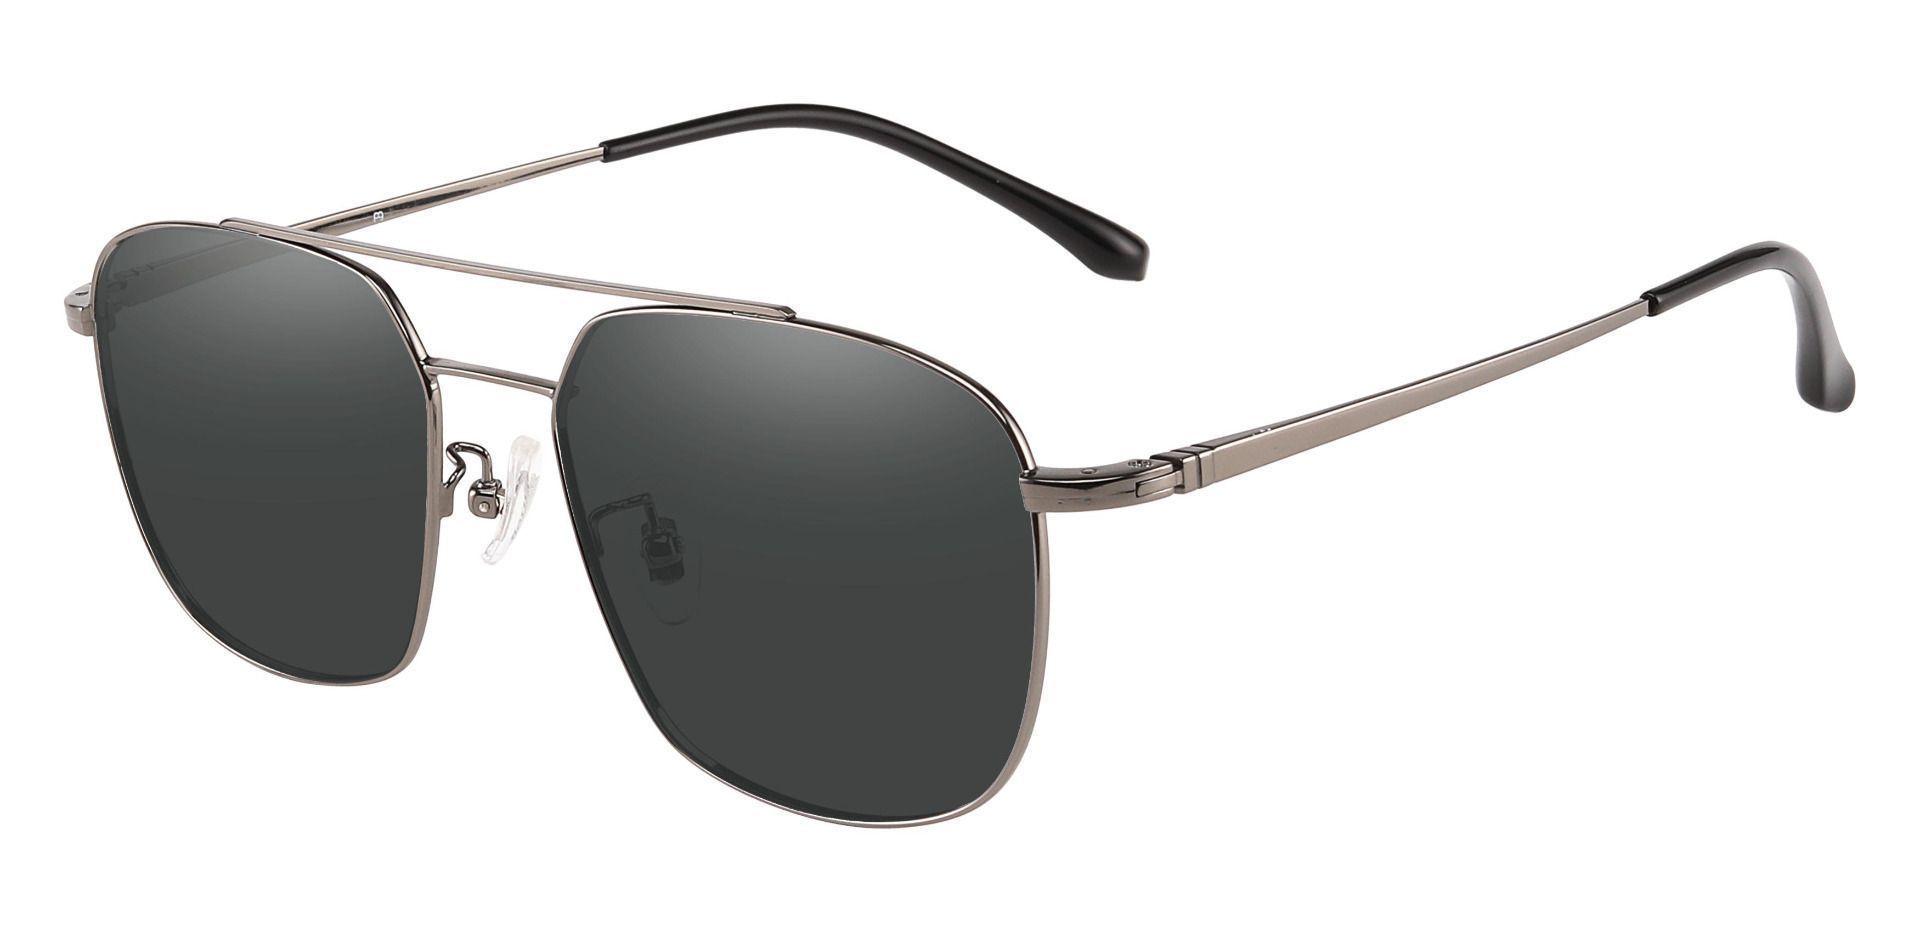 Trevor Aviator Prescription Sunglasses - Gray Frame With Gray Lenses